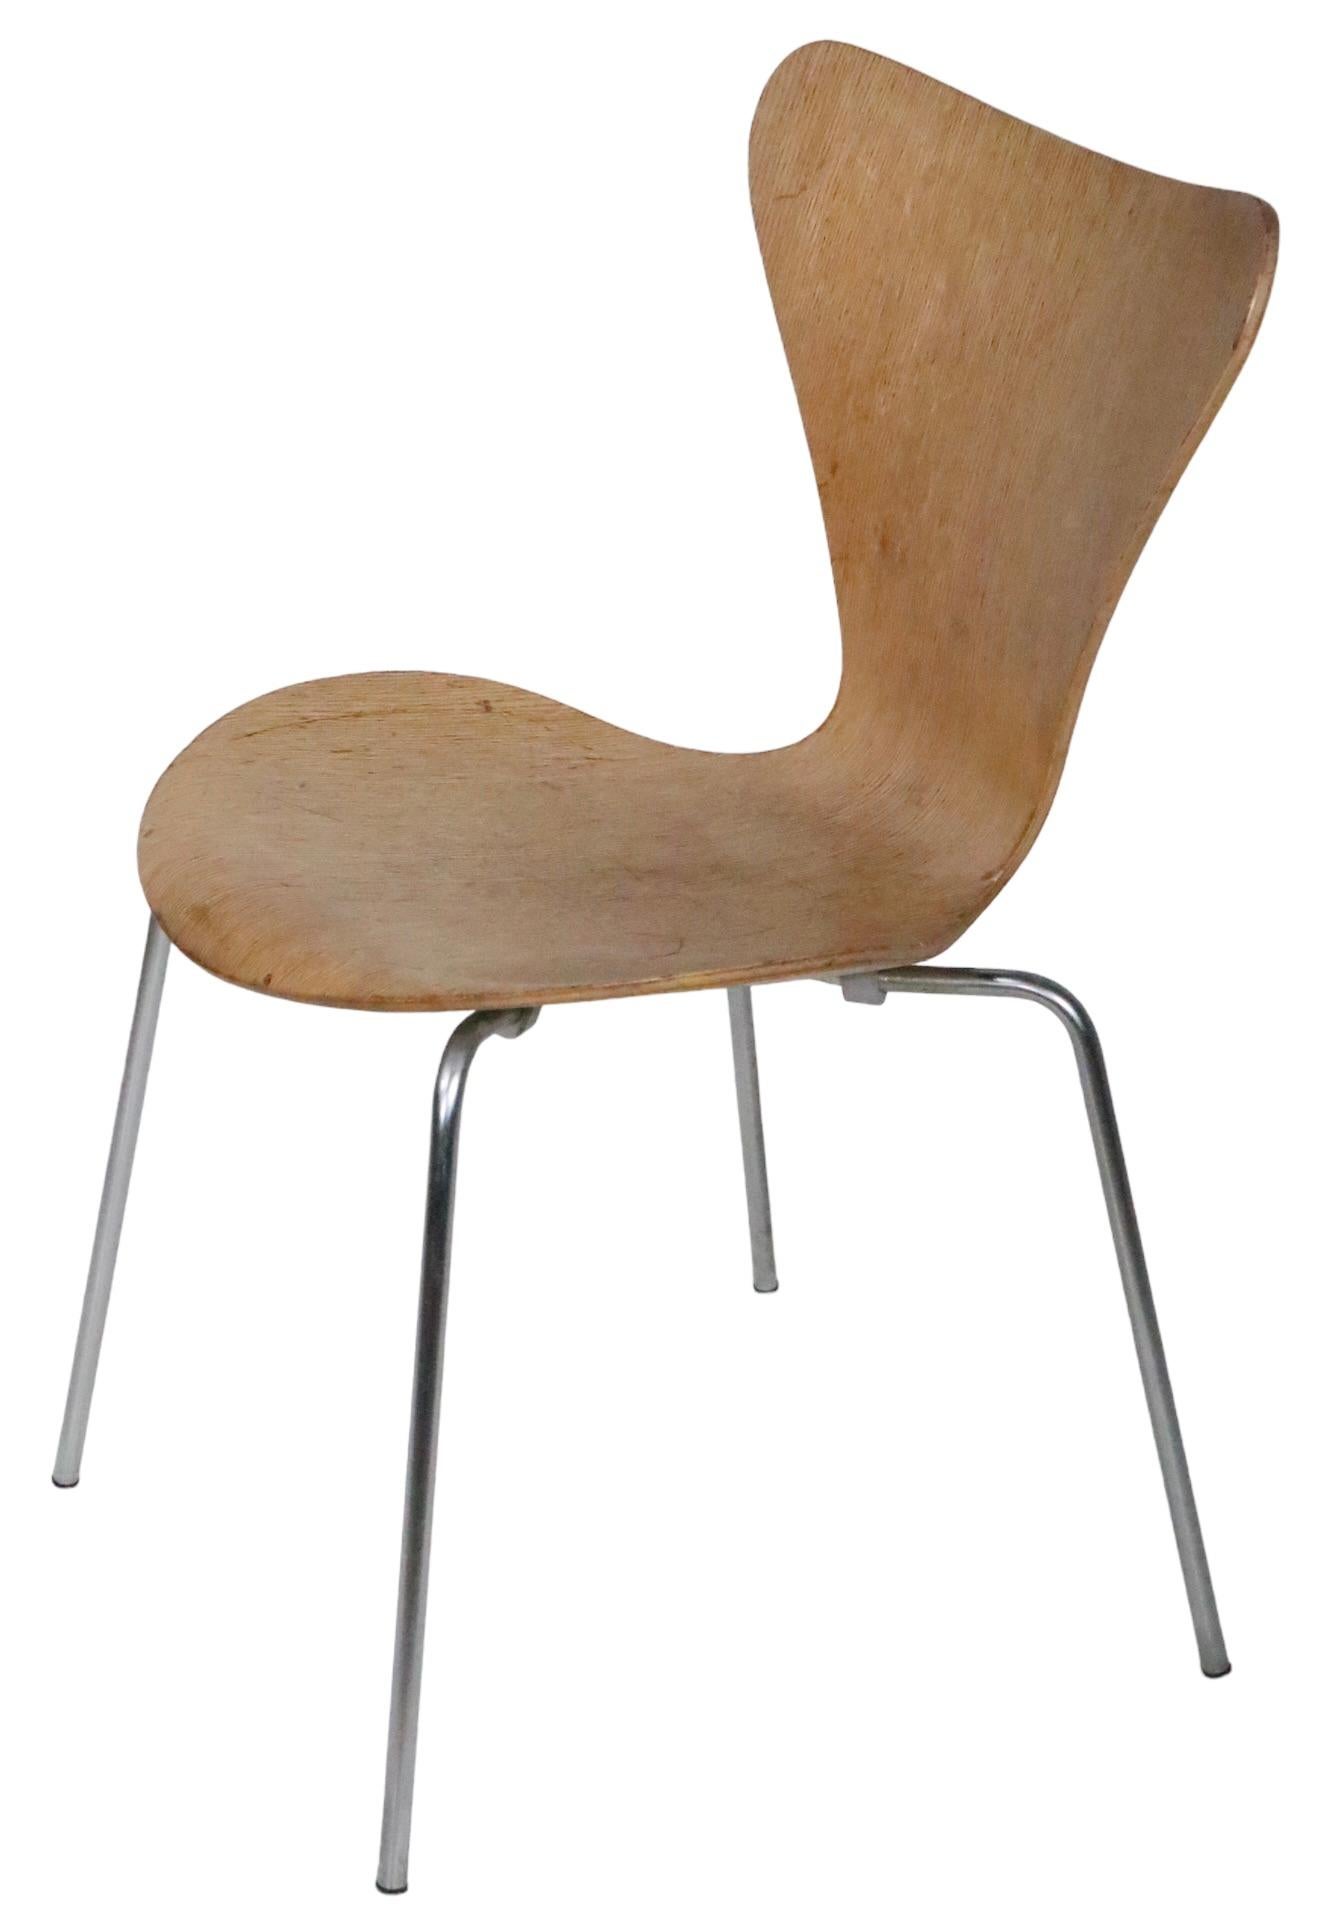 Arne Jacobsen Fritz Hansen Series 7 Butterfly Chair in Oak Veneer, circa 1960s For Sale 7